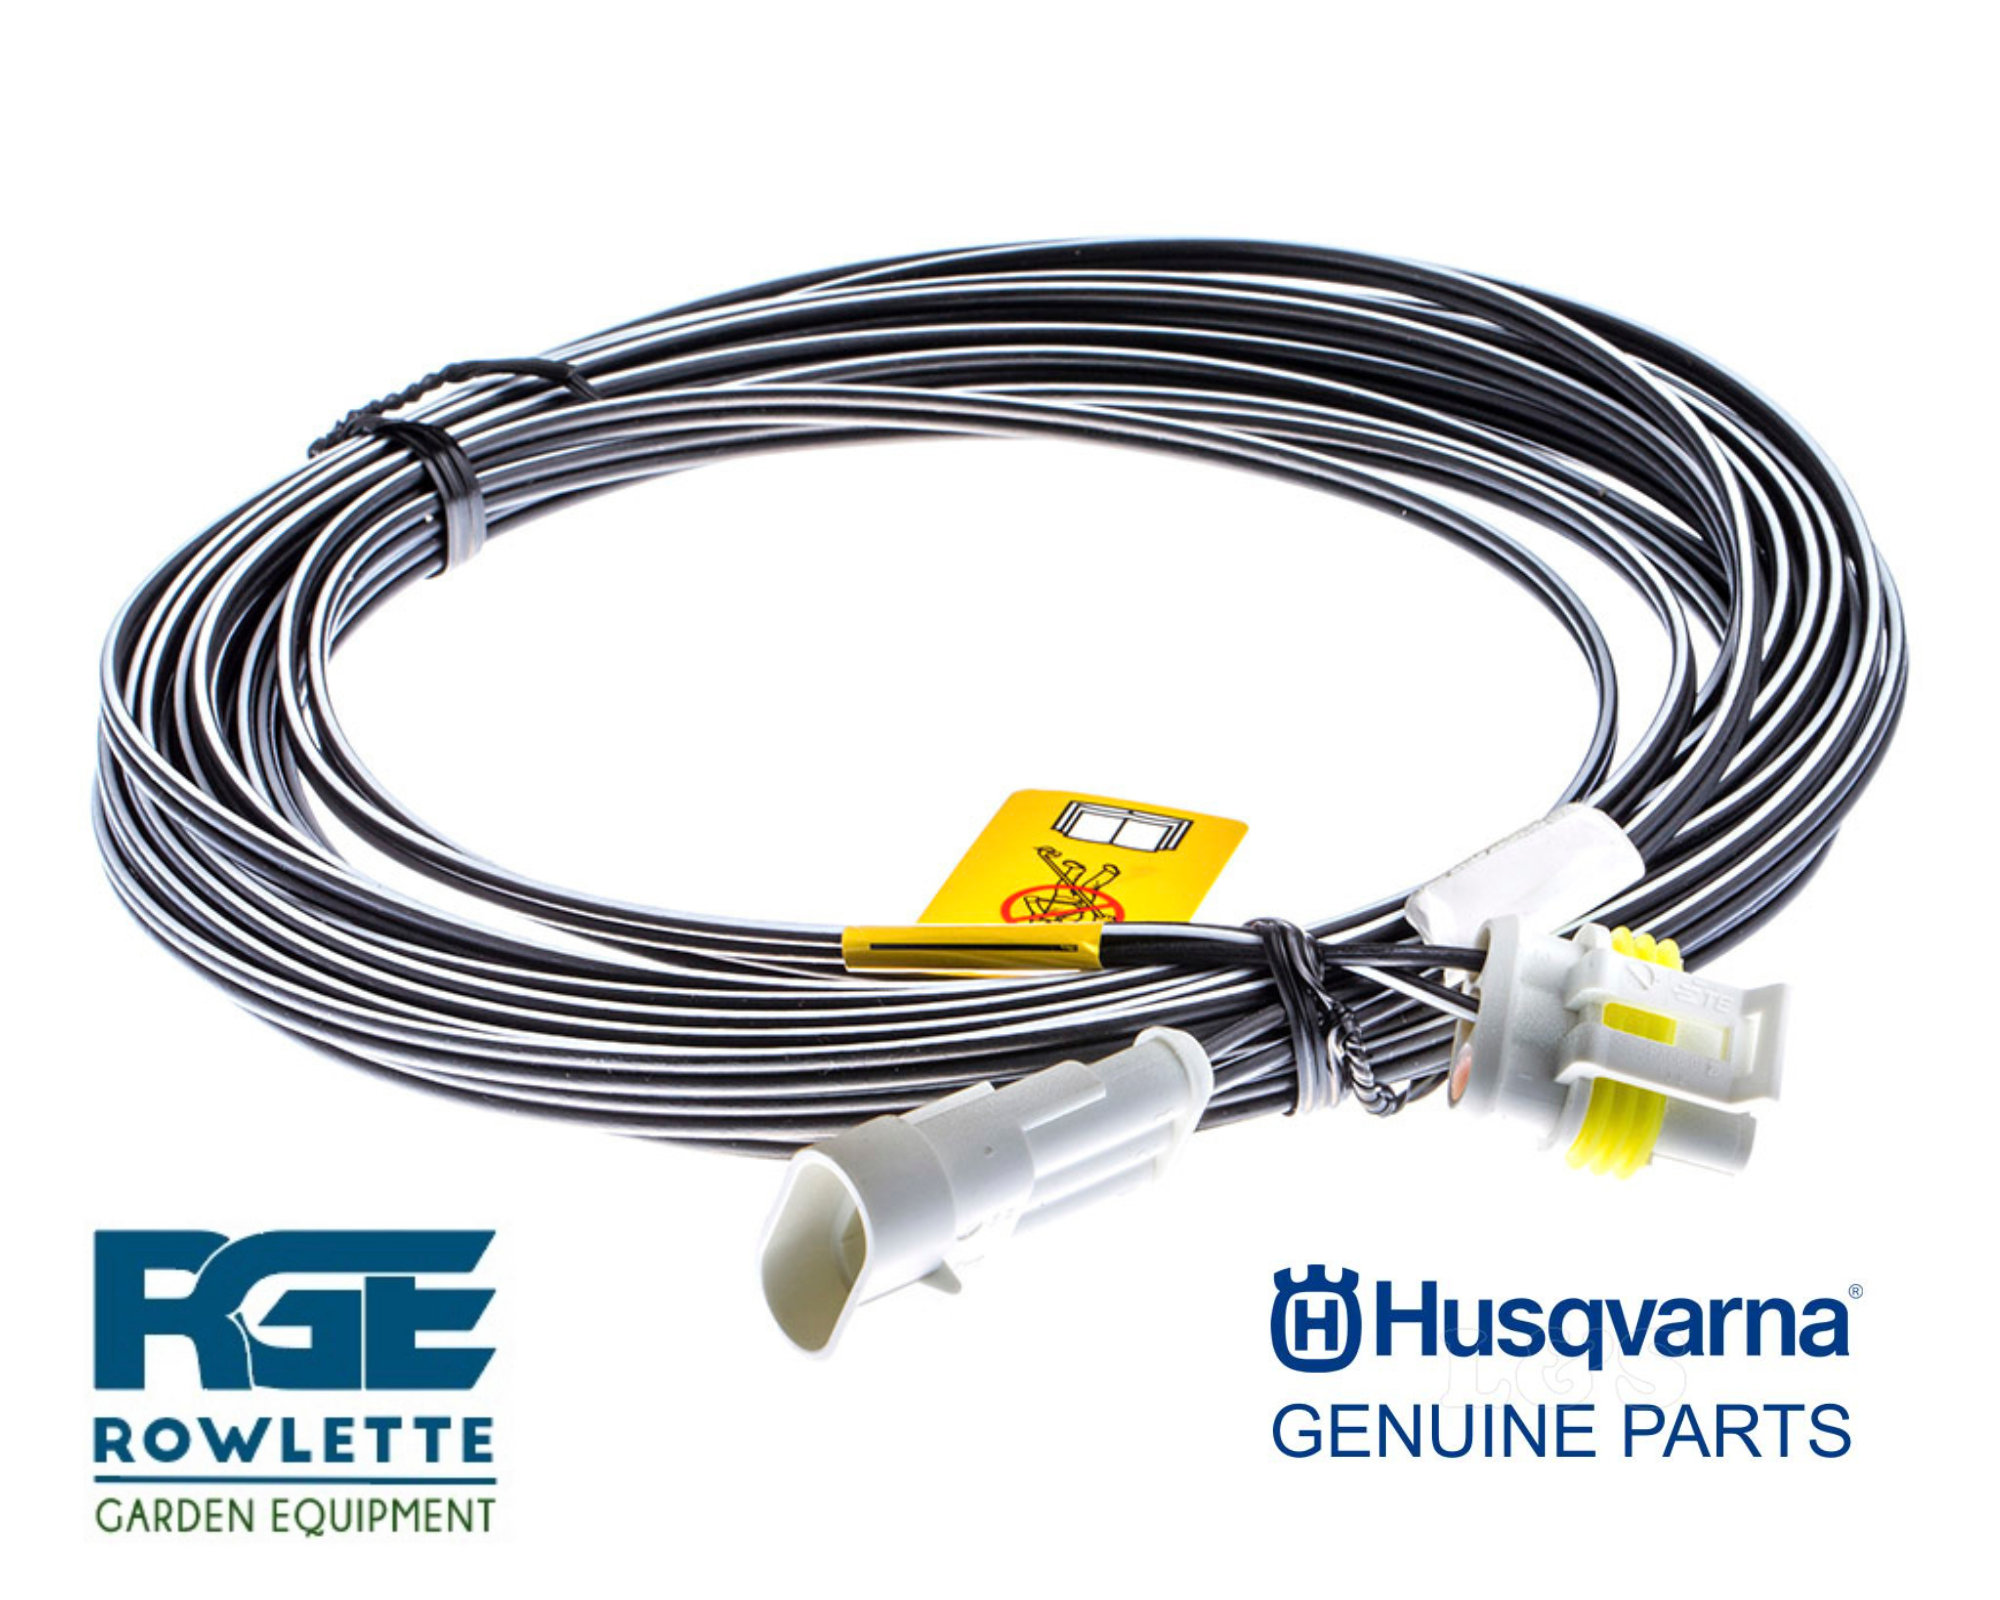 Genuine Husqvarna Automower Low Voltage Cable 10 m